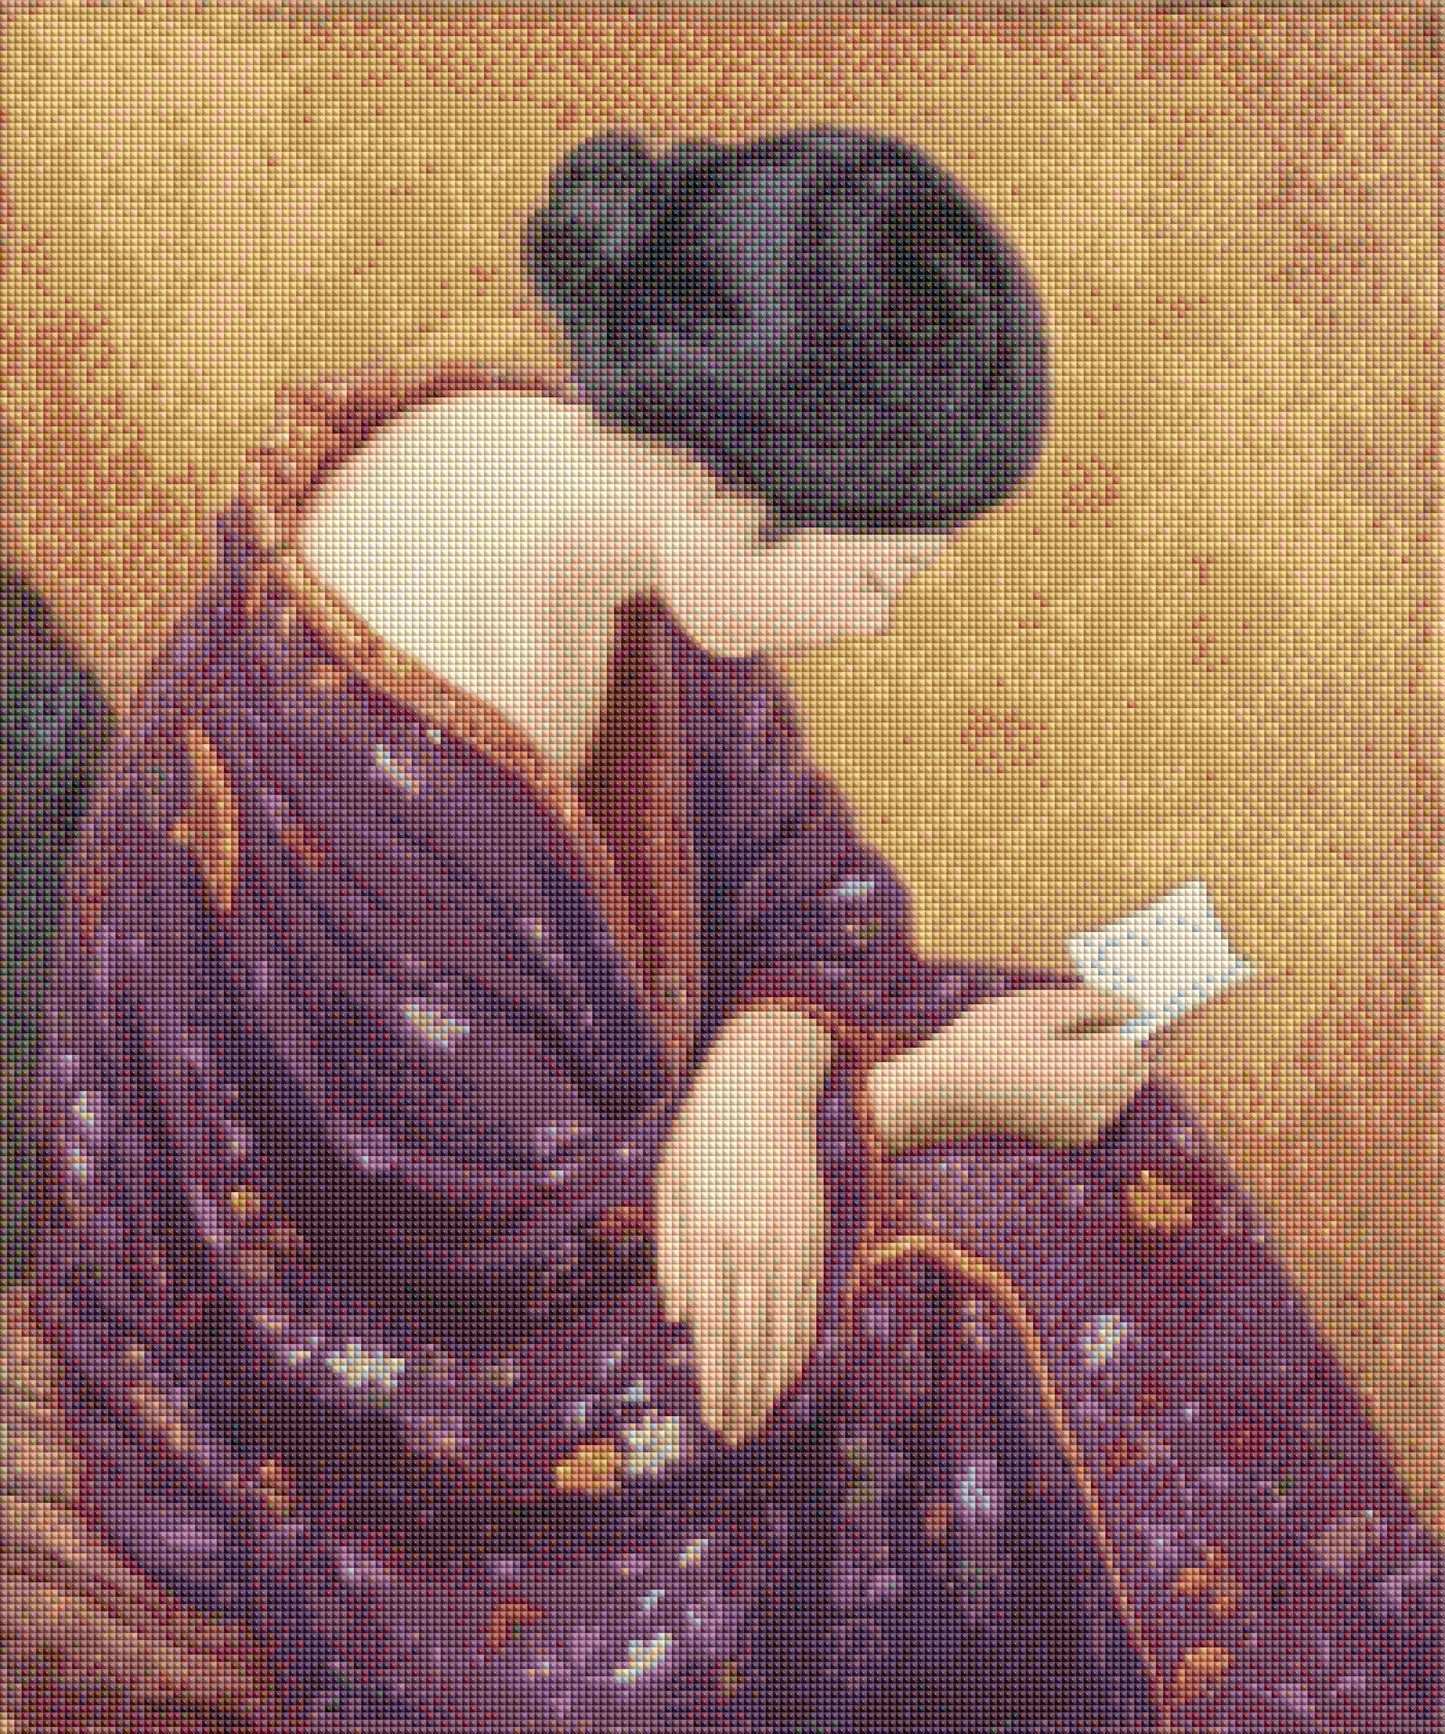 “The Letter” (1928) by Okada Saburosuke